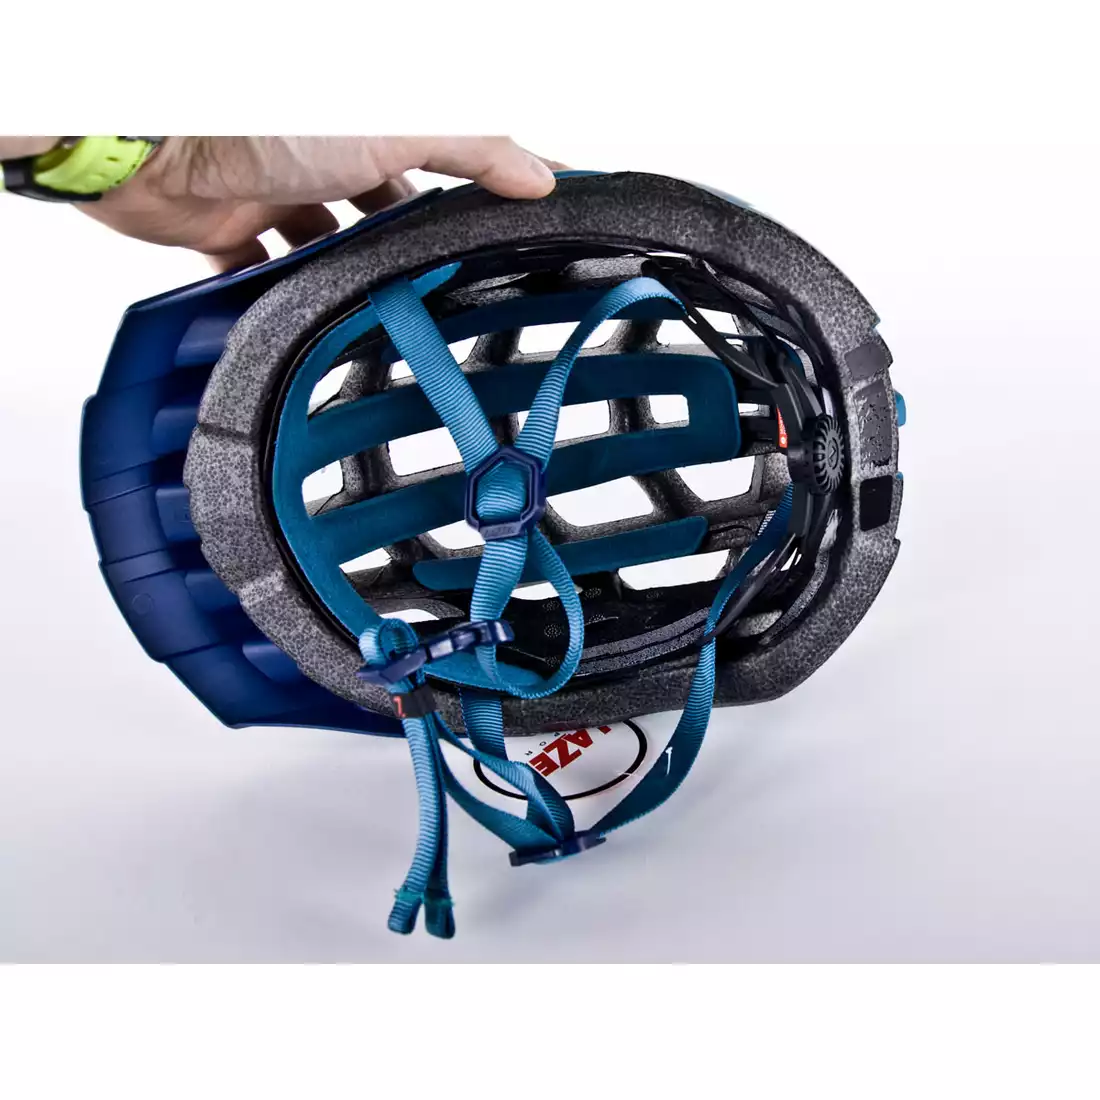 LAZER ROLLER MTB kask rowerowy TS+ niebieski mat